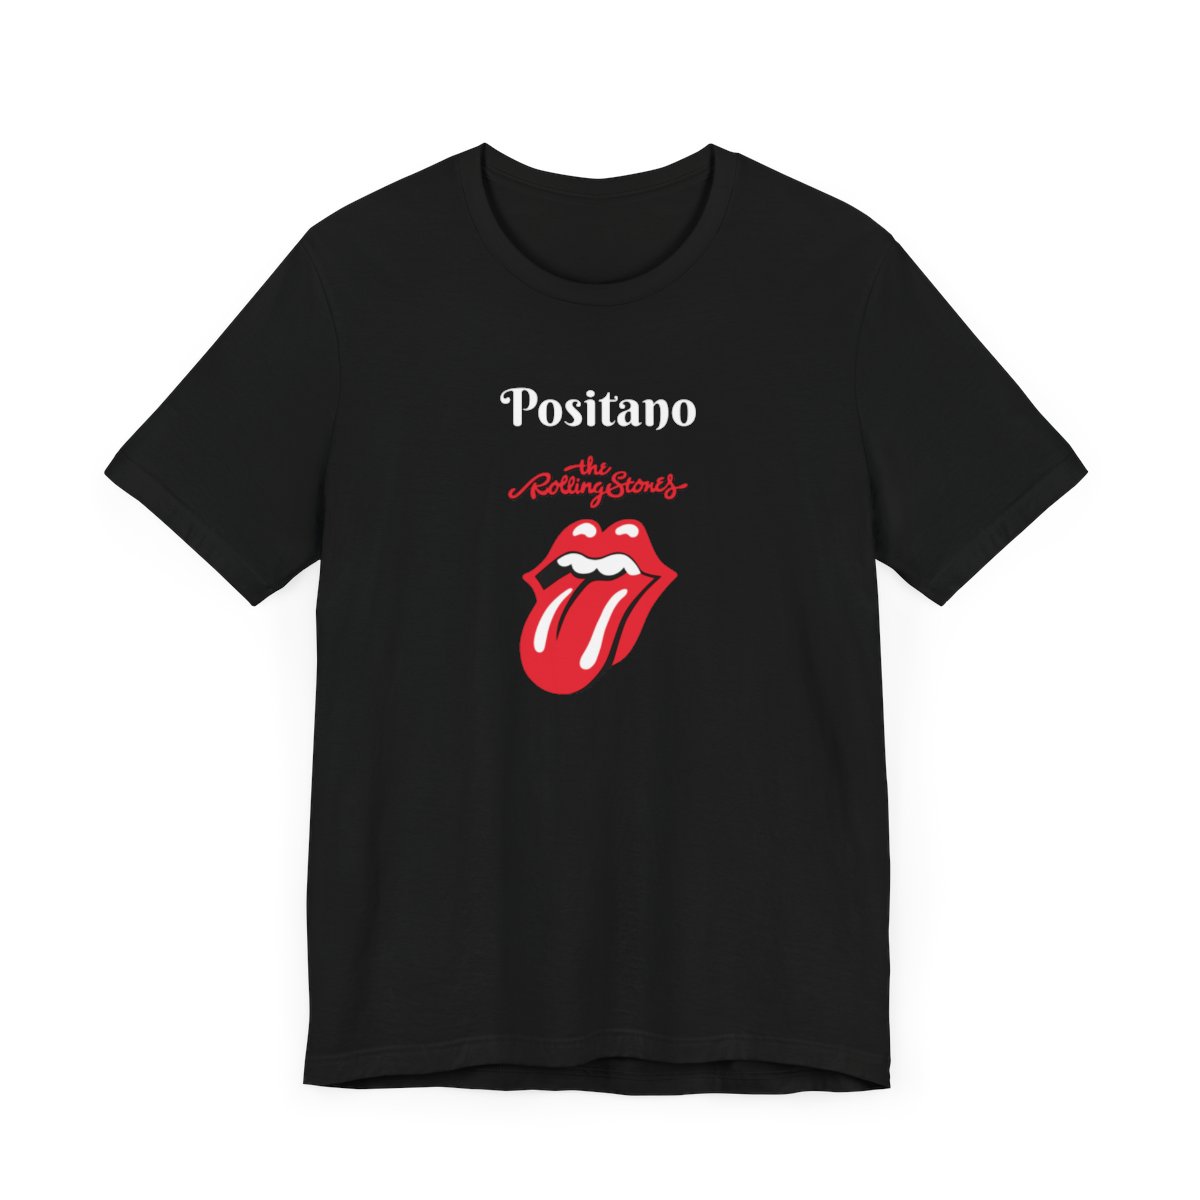 RollingStones POSITANO Tee Shirt product thumbnail image